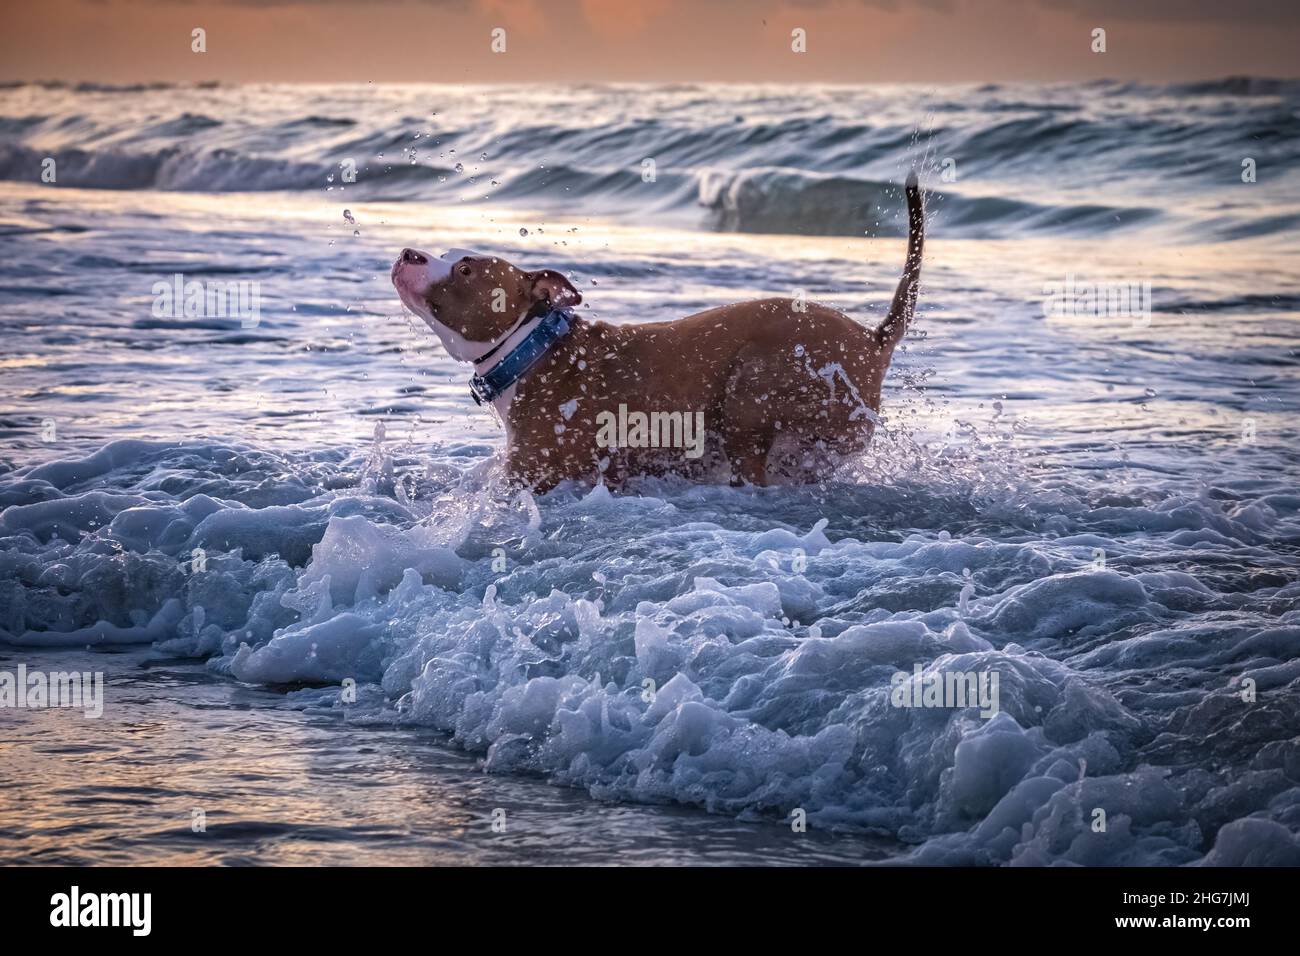 A goofy pitbull dog splashes, runs, and plays at the beach at Emerald Isle, North Carolina. Stock Photo